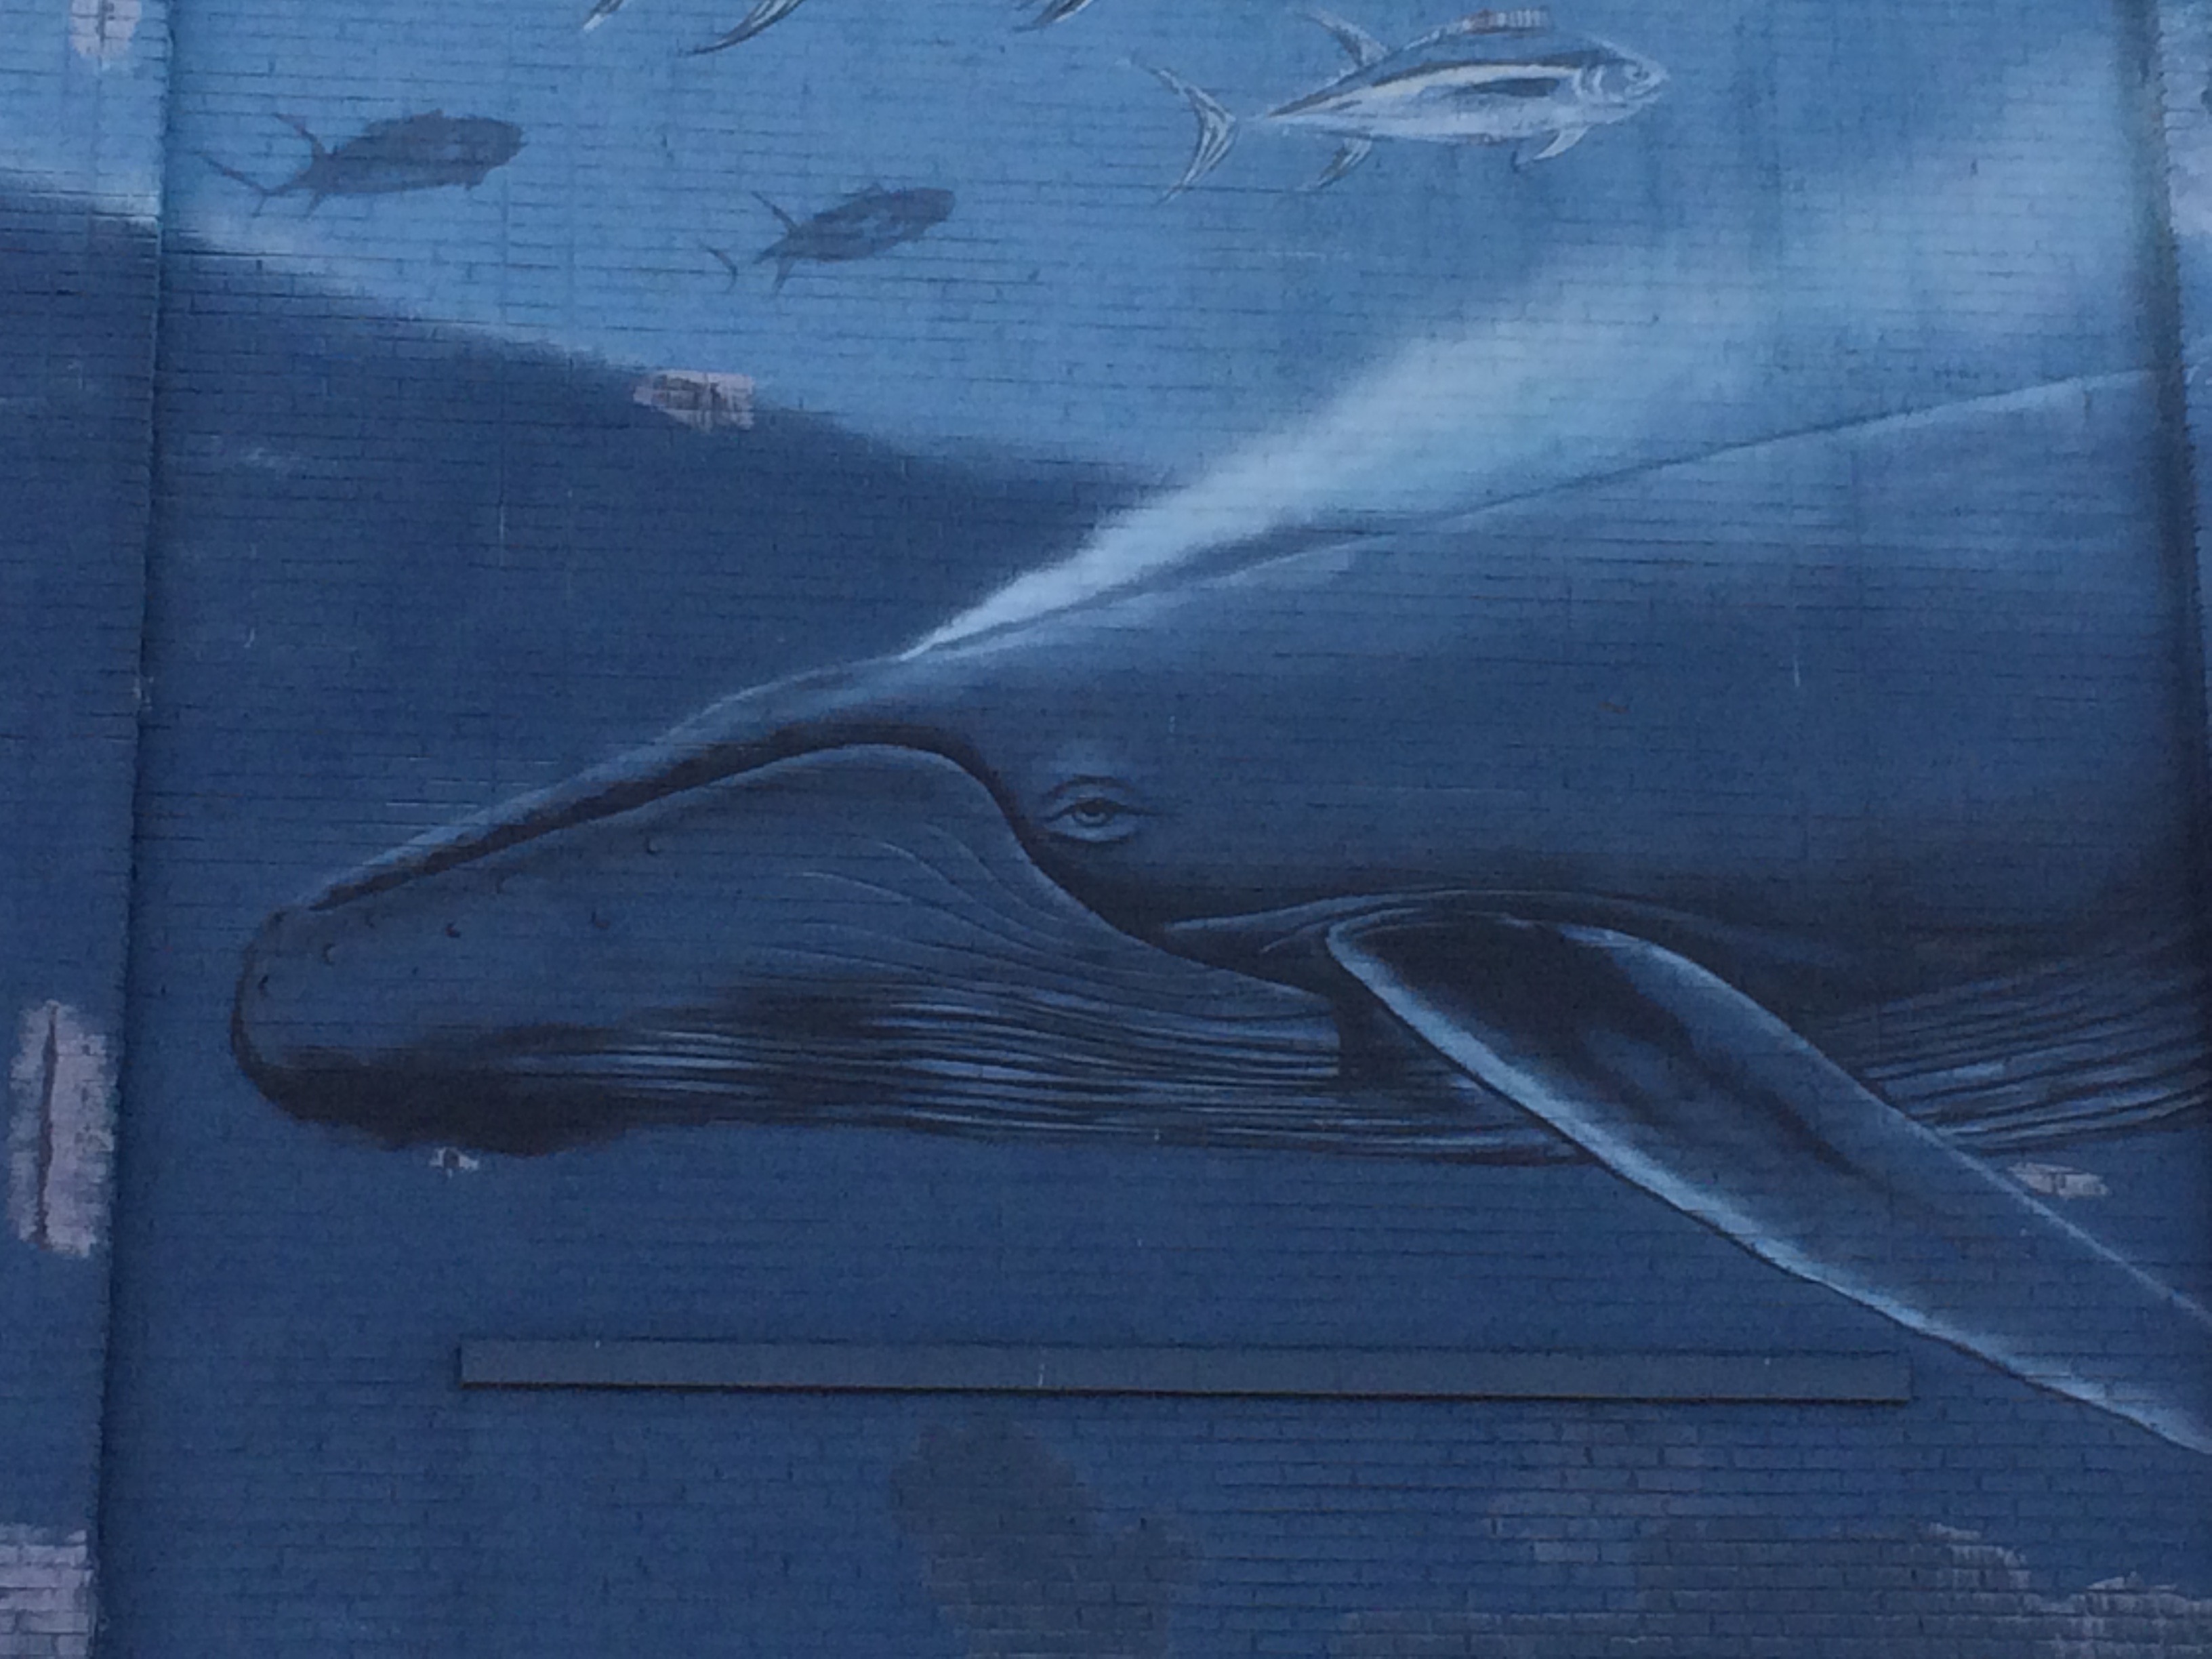 Whaling Wall #42 “East Coast Humpbacks”